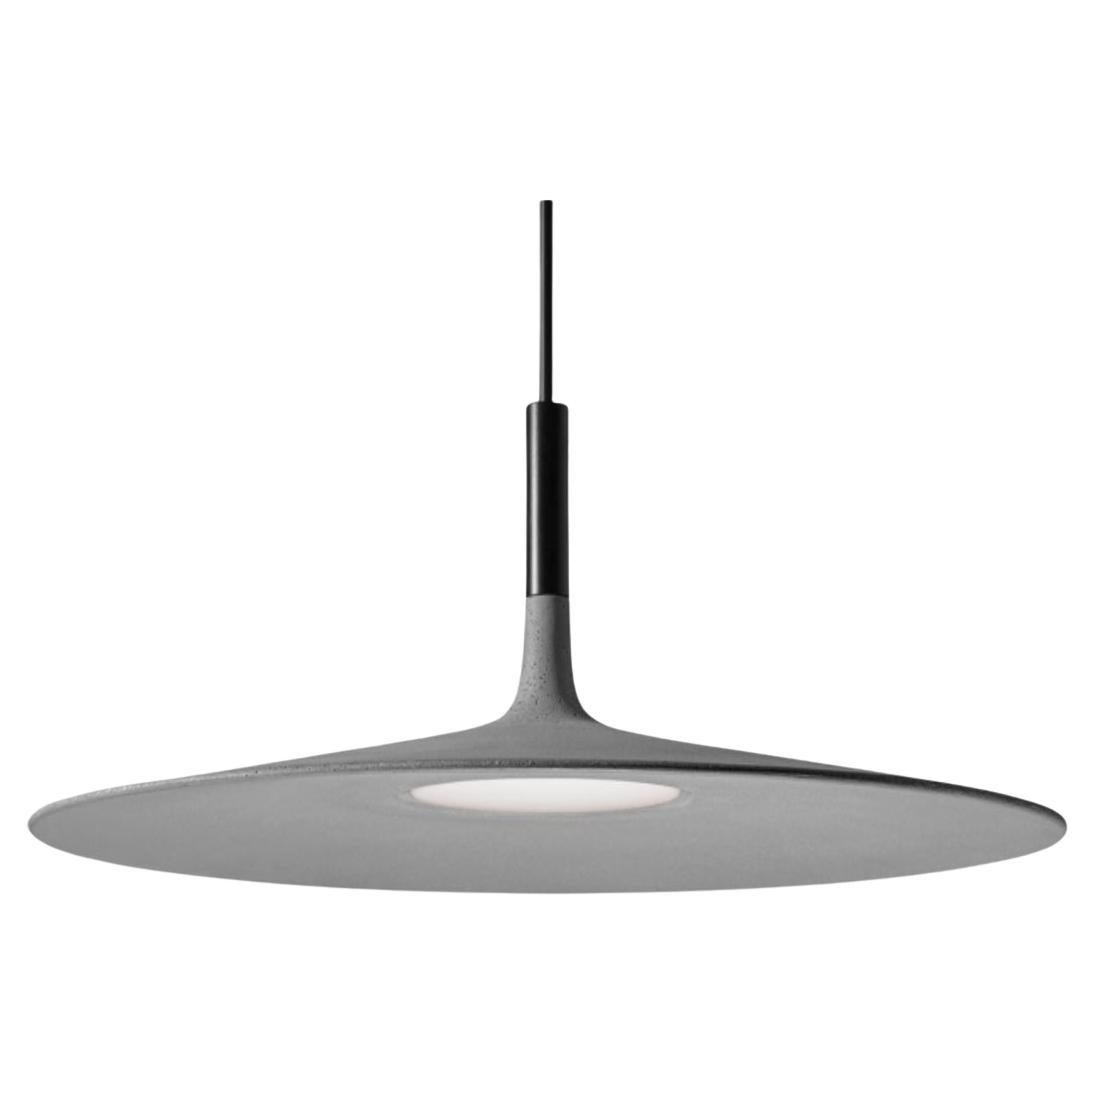 Lucidi & Pevere Large ‘Aplomb’ Concrete Pendant Lamp in Grey for Foscarini For Sale